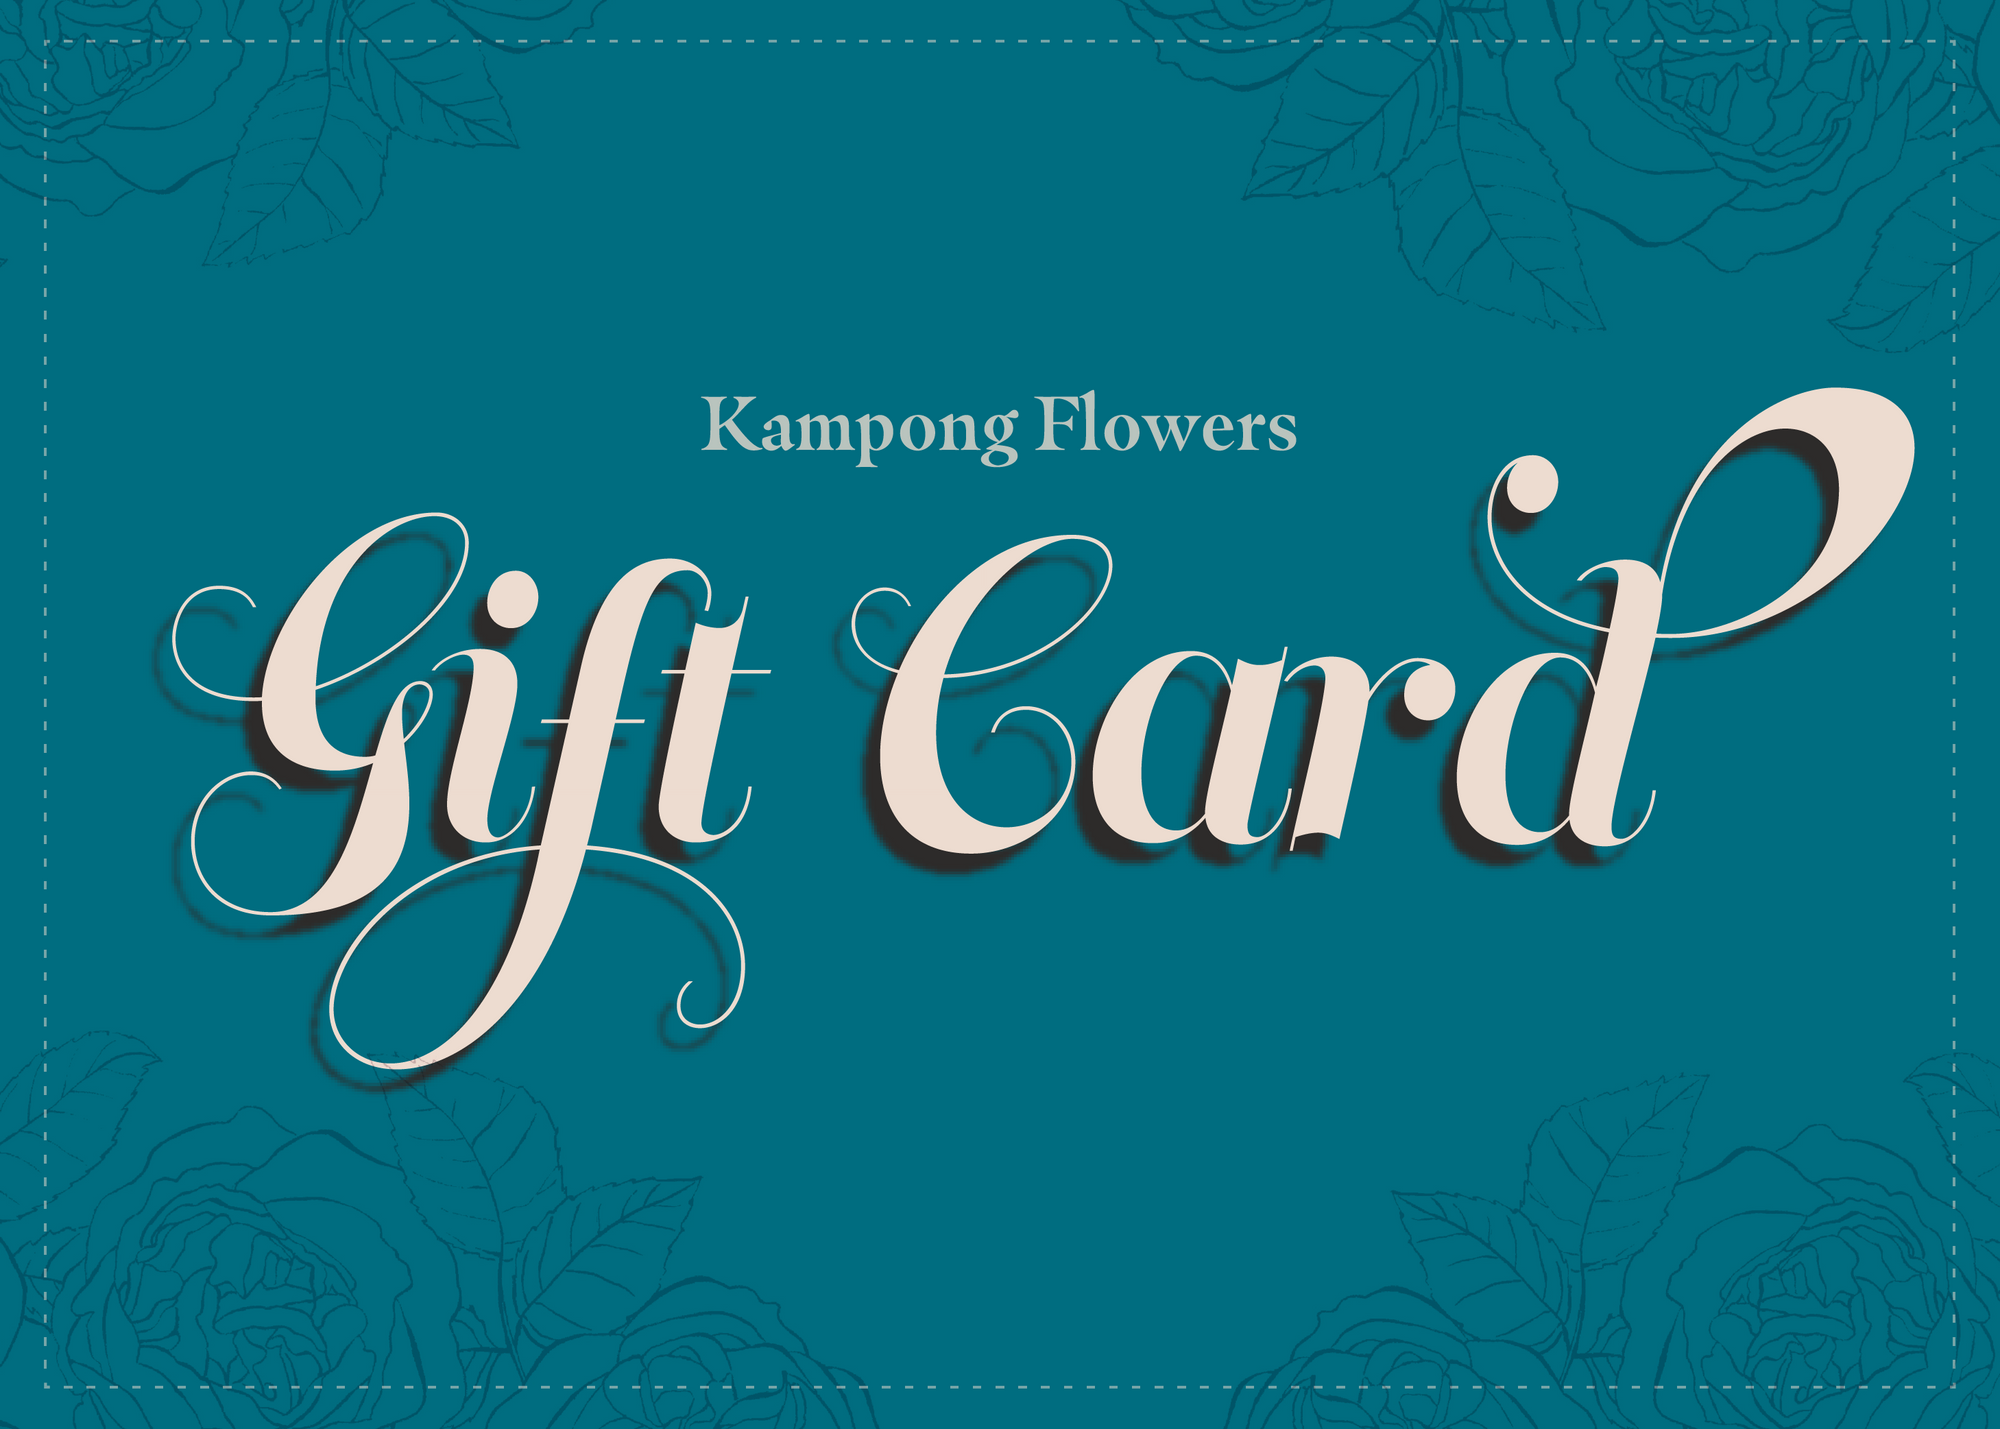 Kampong Flowers Gift Card